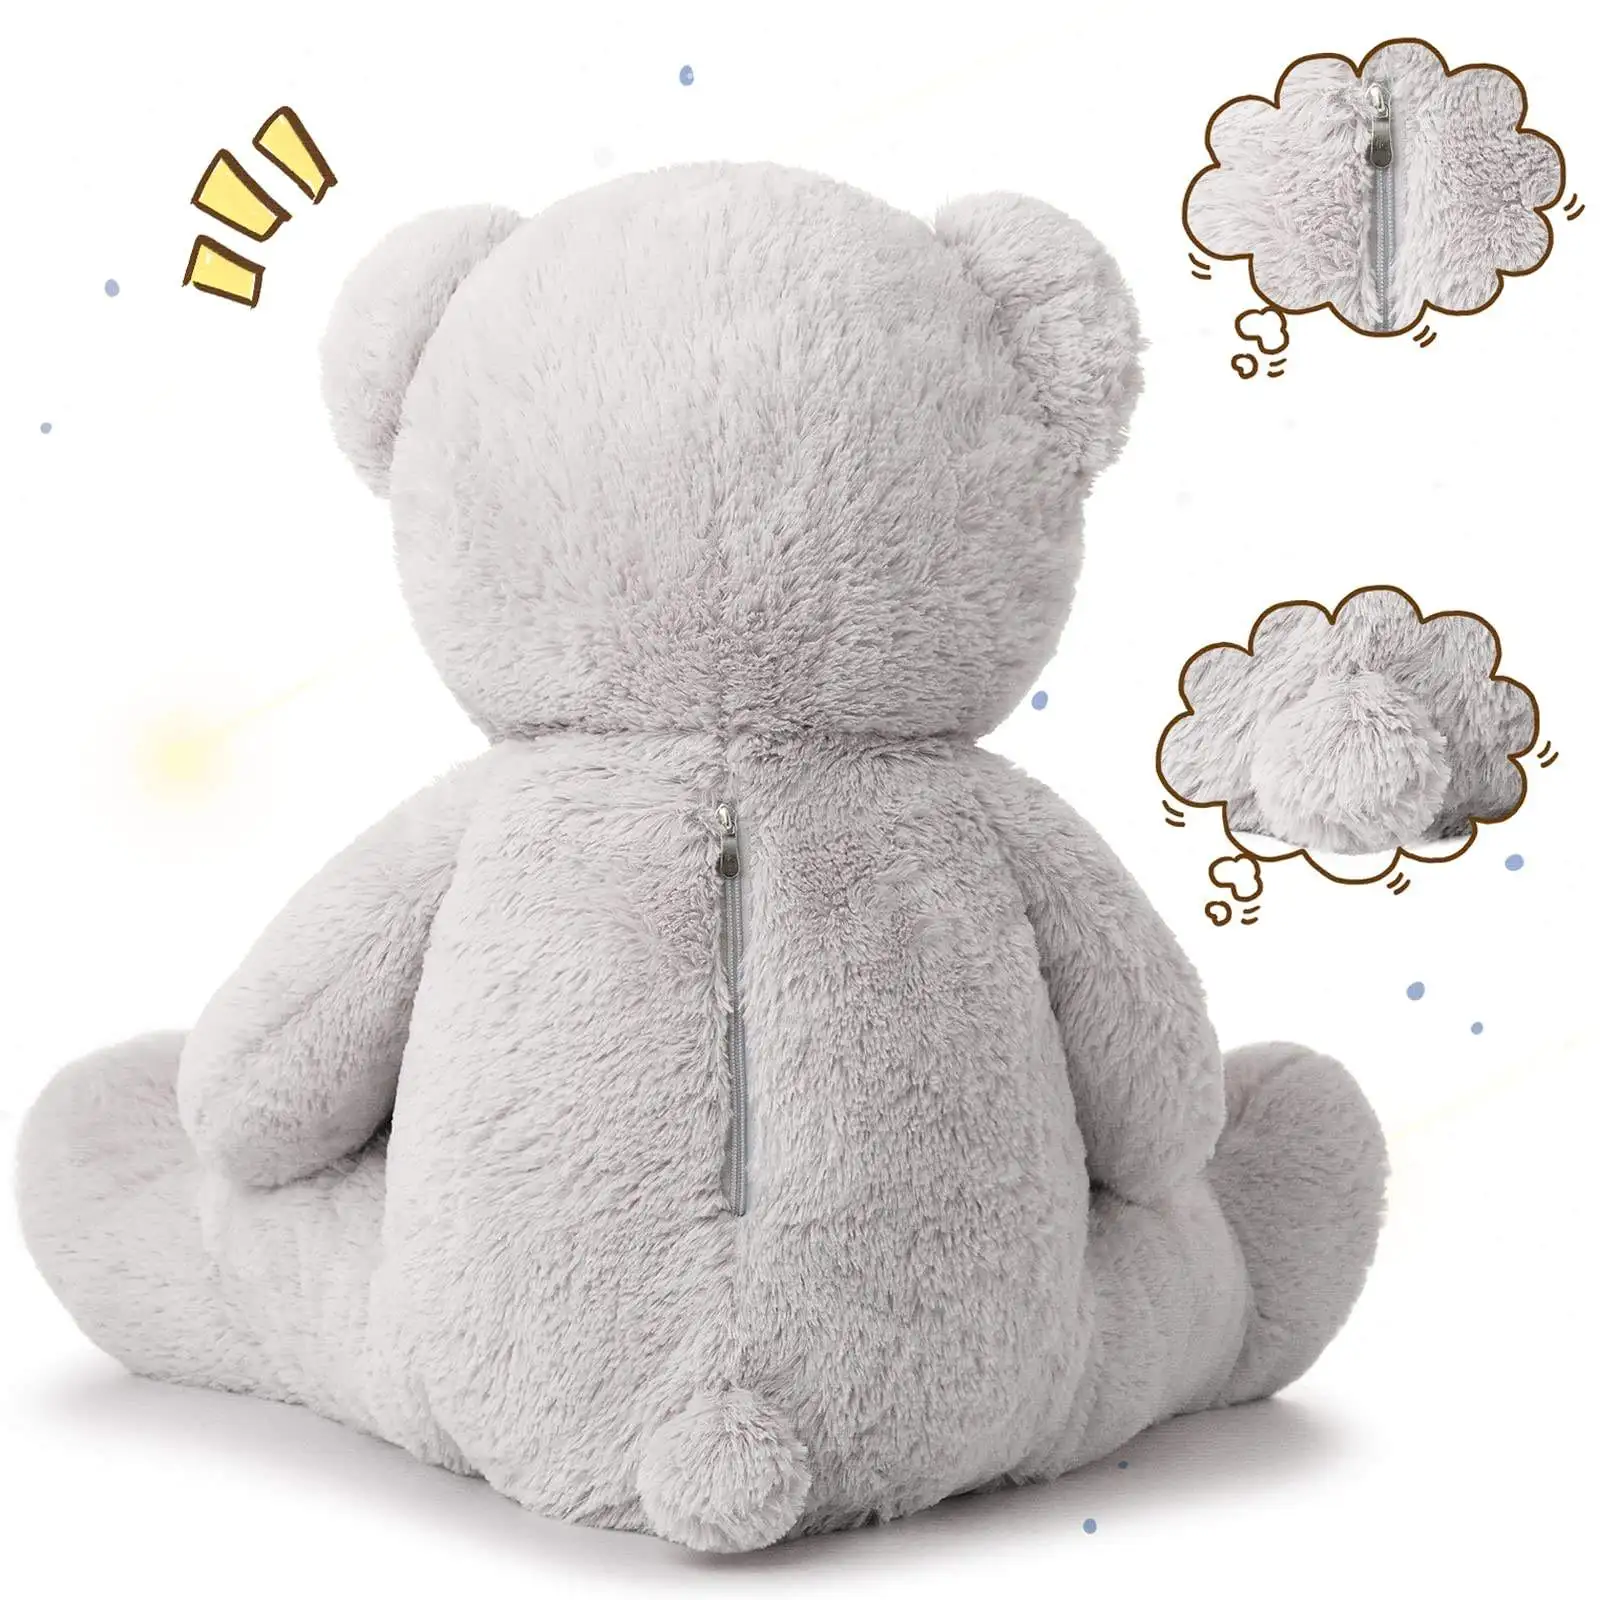 Giant Teddy Bear Plush Toy Soft Stuffed Animal Doll High Quality Kawaii Pillow Home Decor Toys For Children